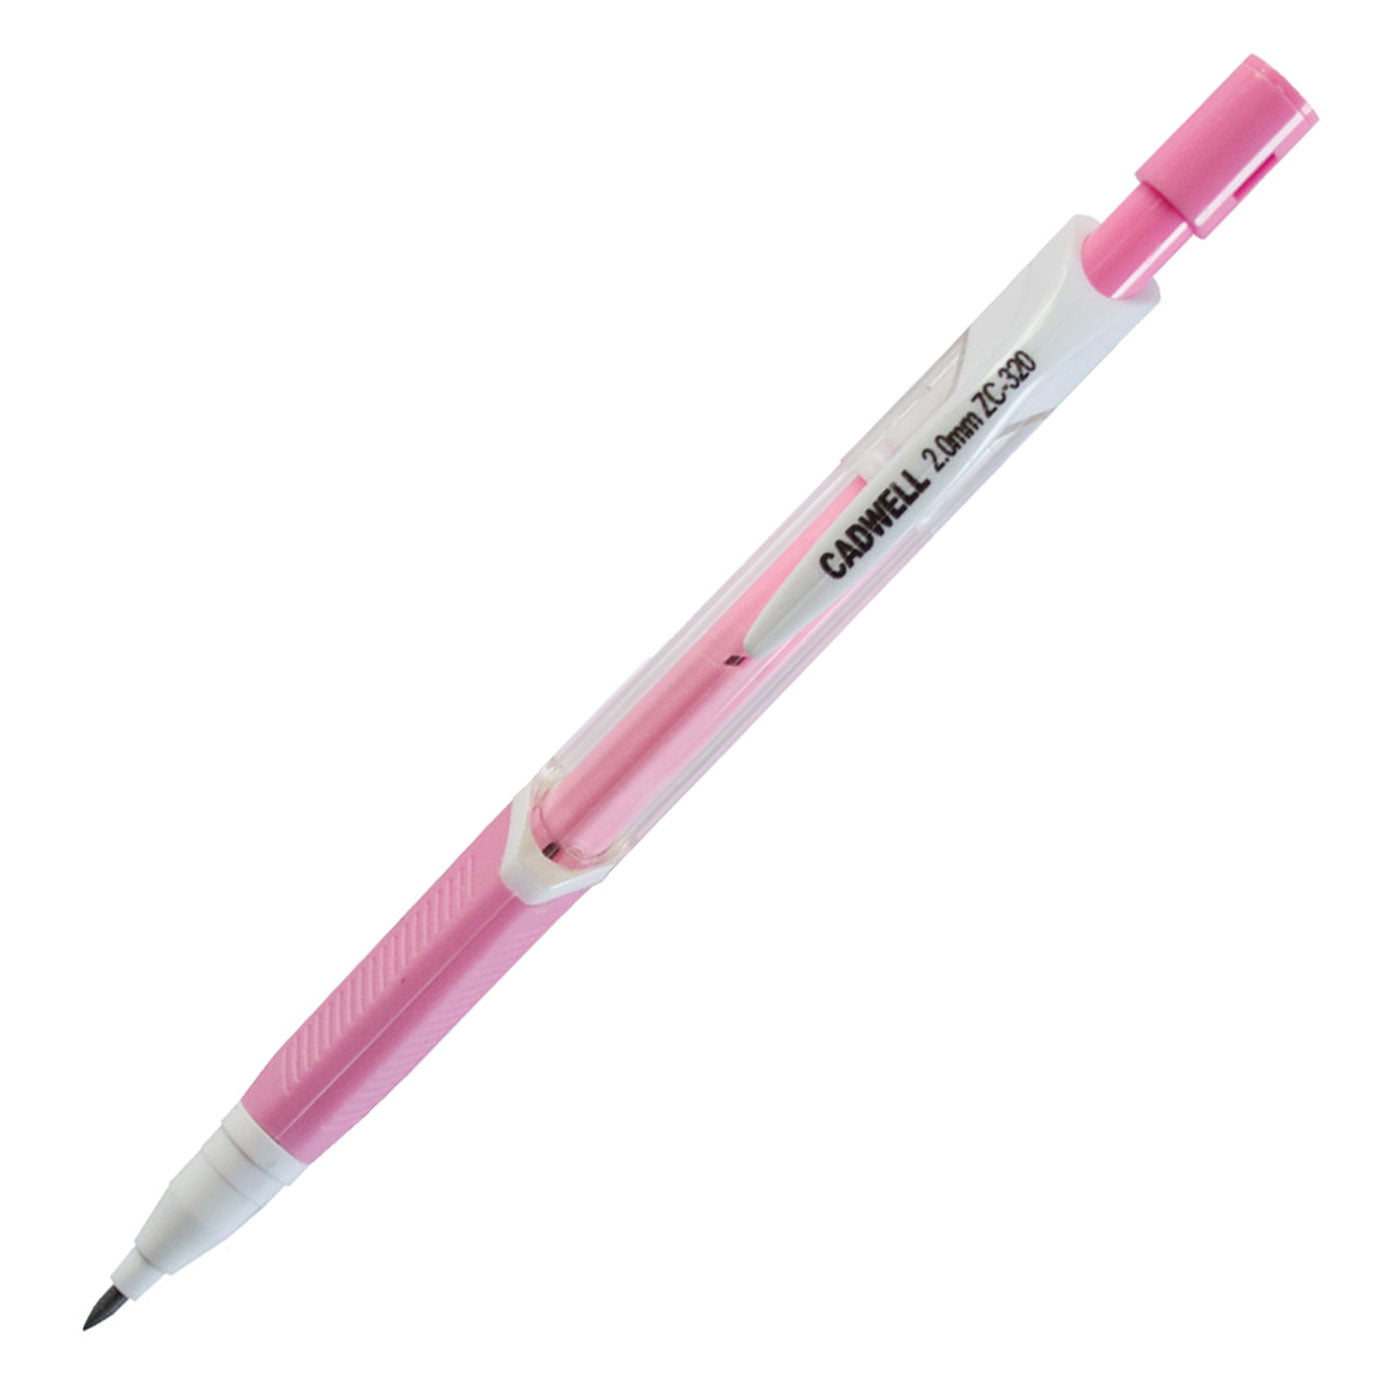 Cadwell Triangular Mechanical Clutch Pencil ZC-320 + Lead Sharpener HB 2.00mm Pink